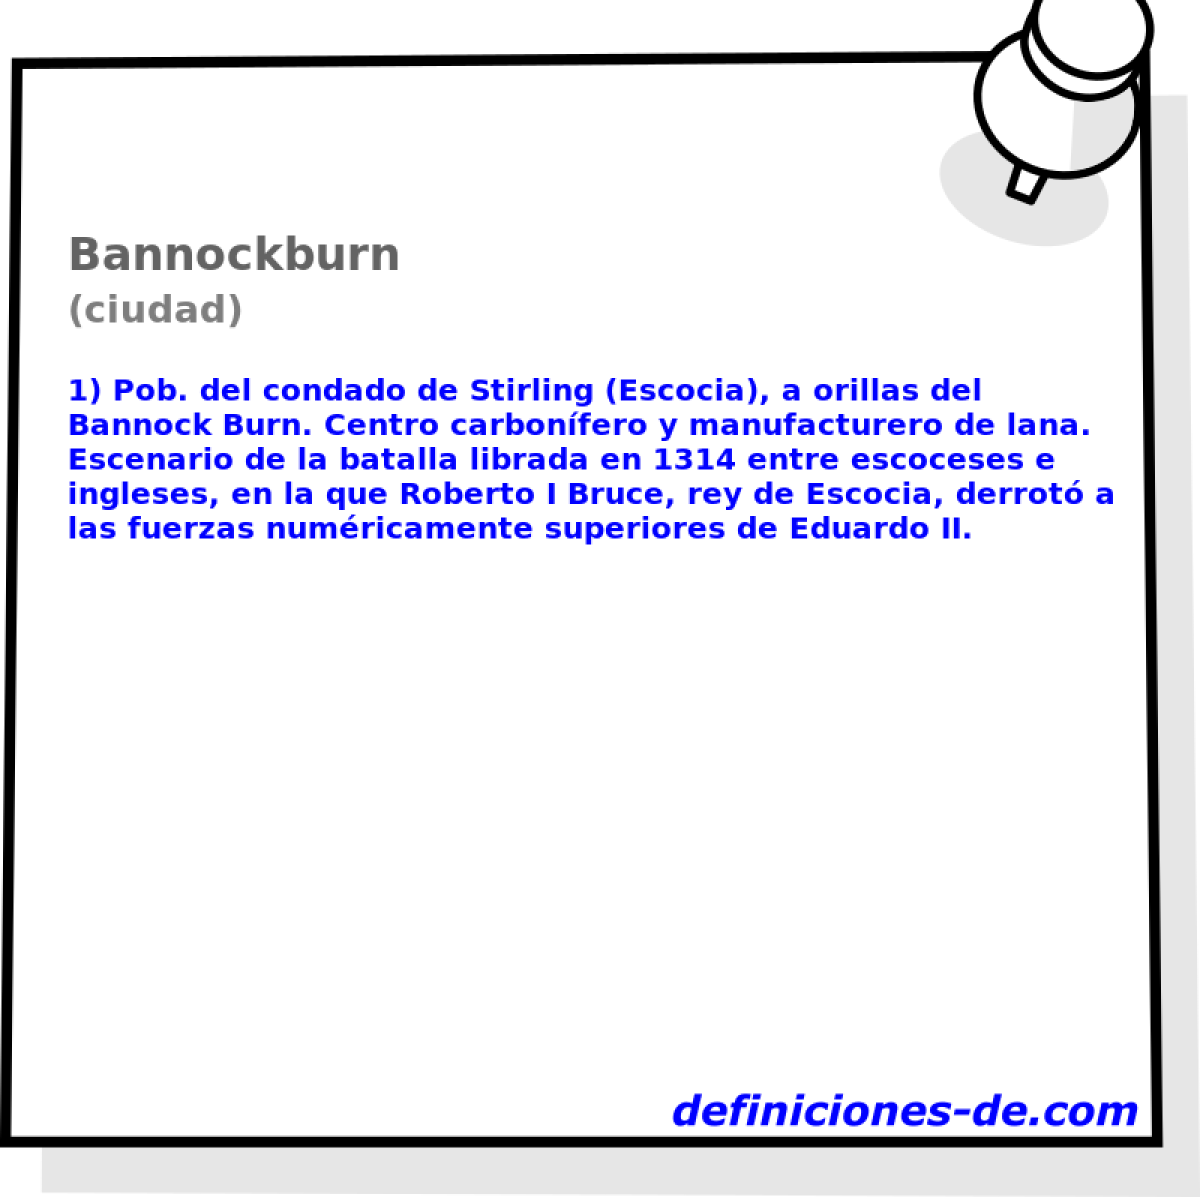 Bannockburn (ciudad)